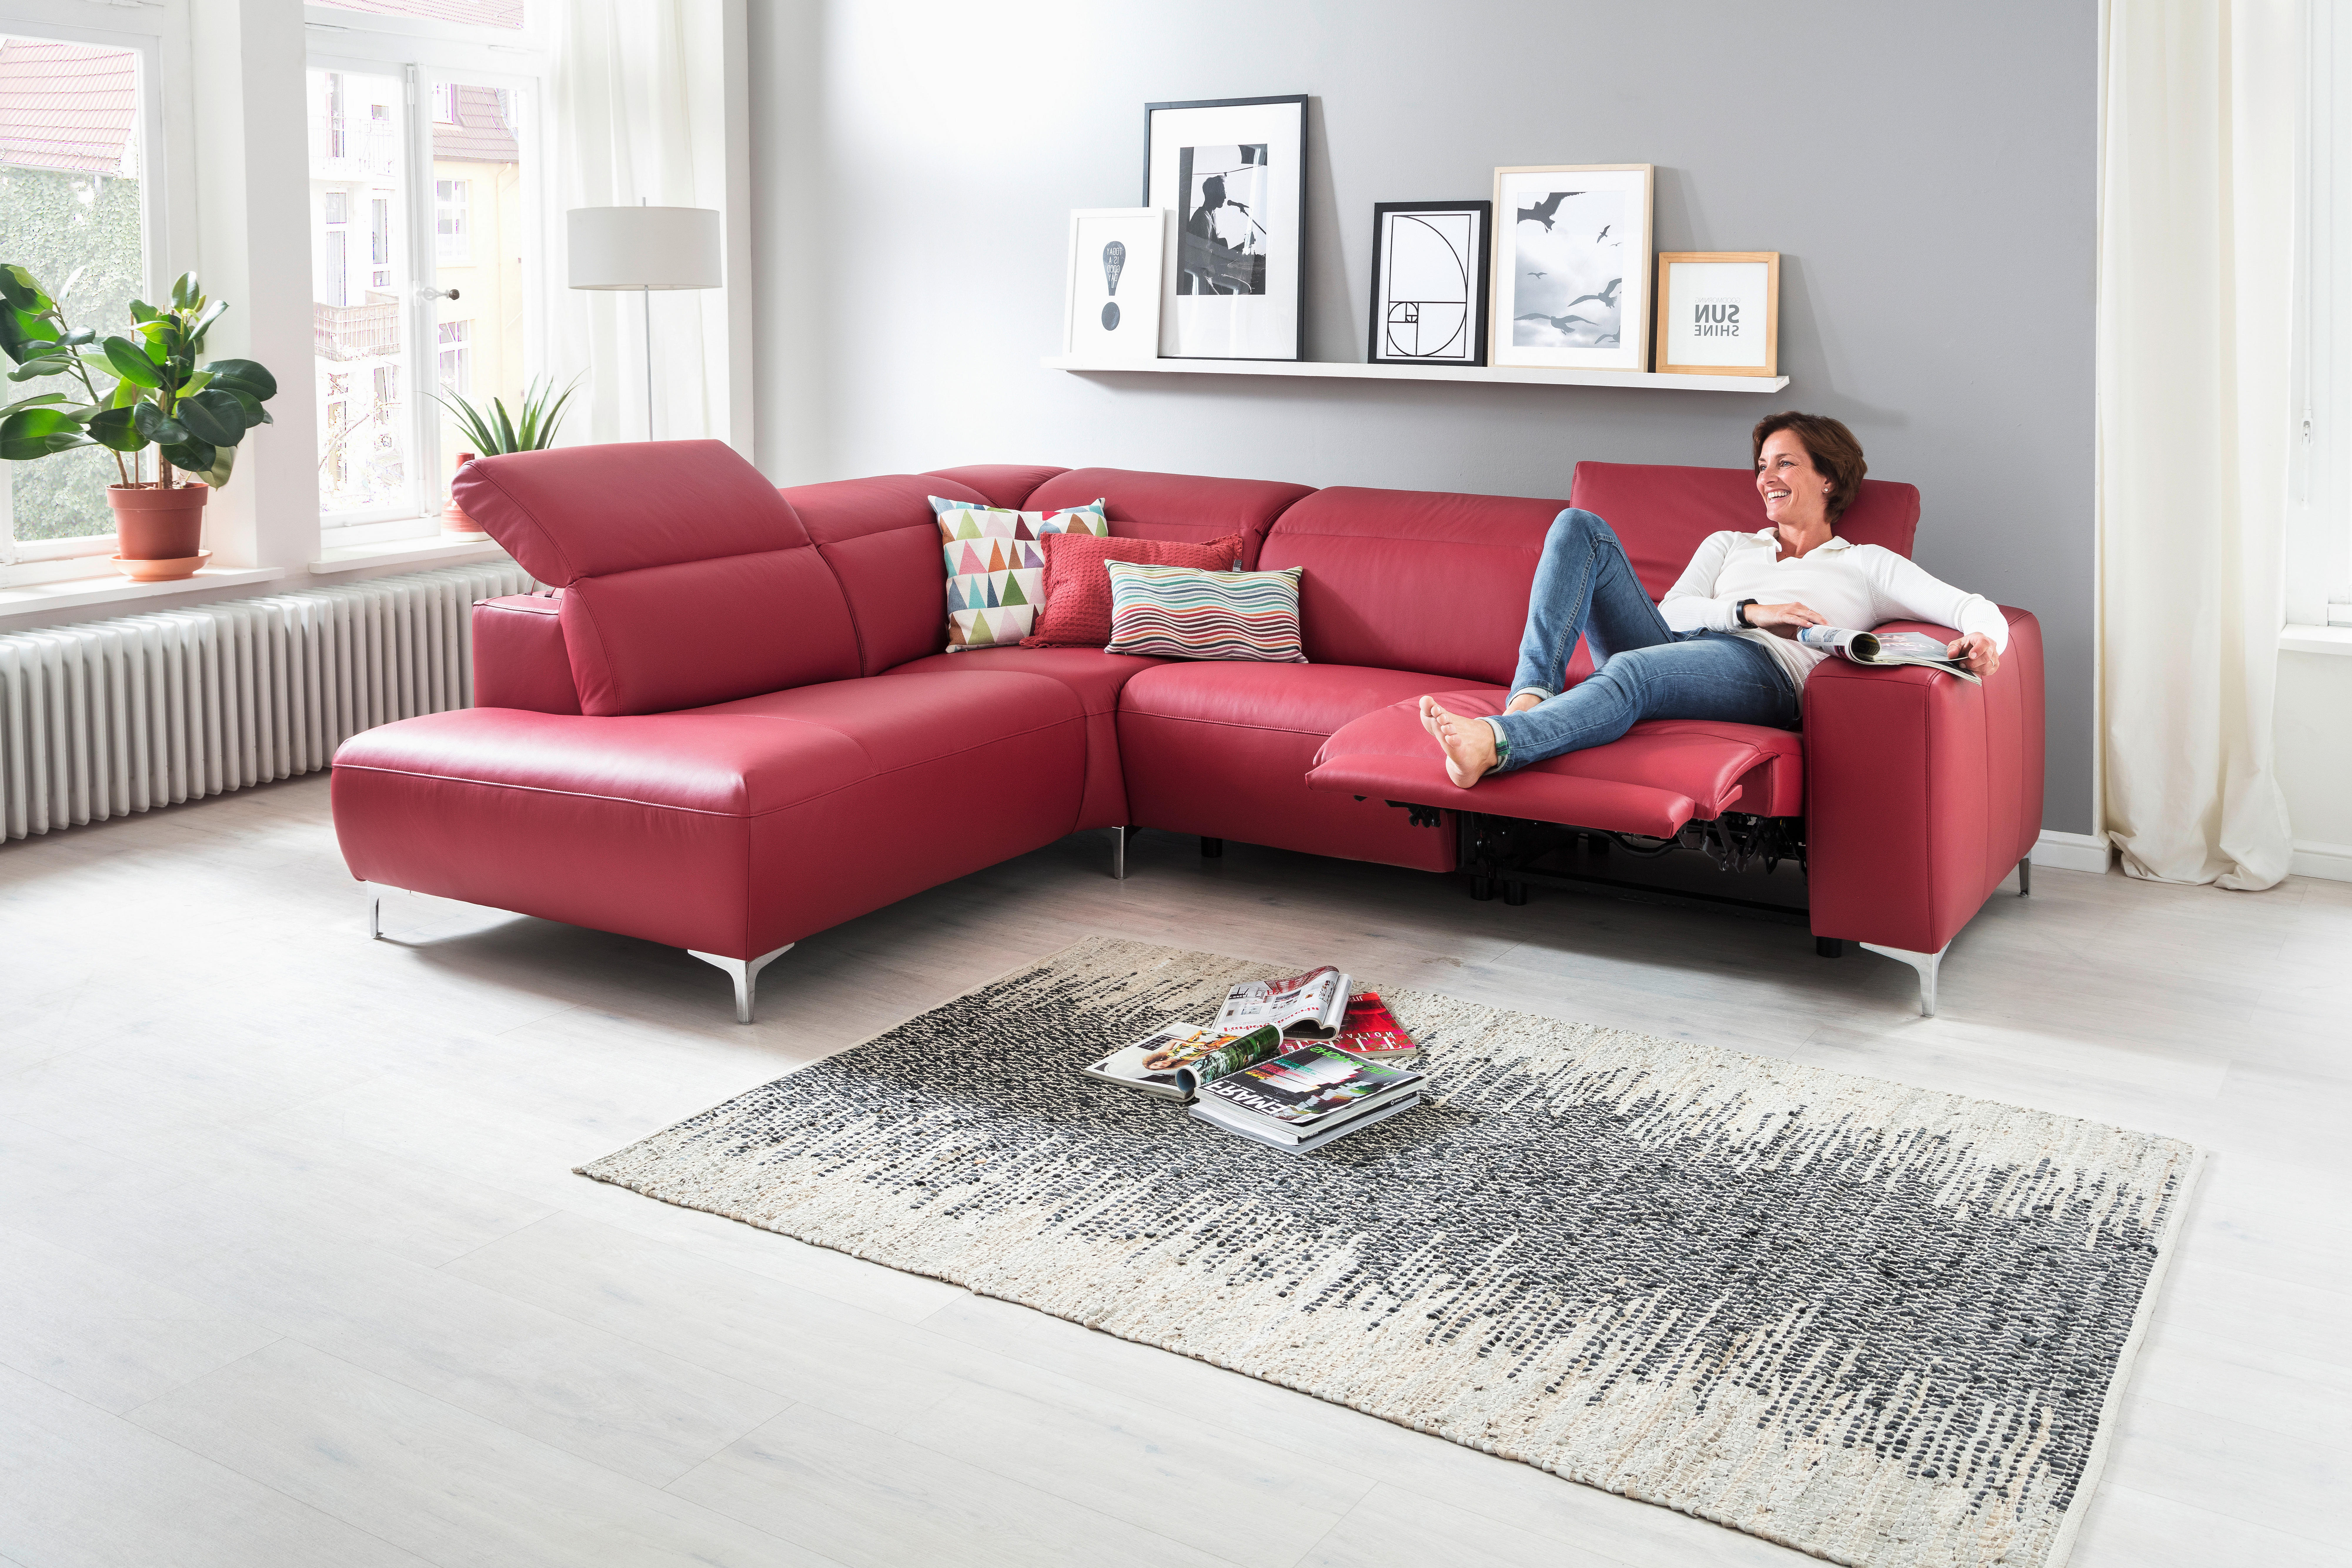 Wohnlandschaft inkl.Funktionen Rot Echtleder  - Chromfarben/Rot, Design, Leder/Metall (223/290cm) - Pure Home Lifestyle